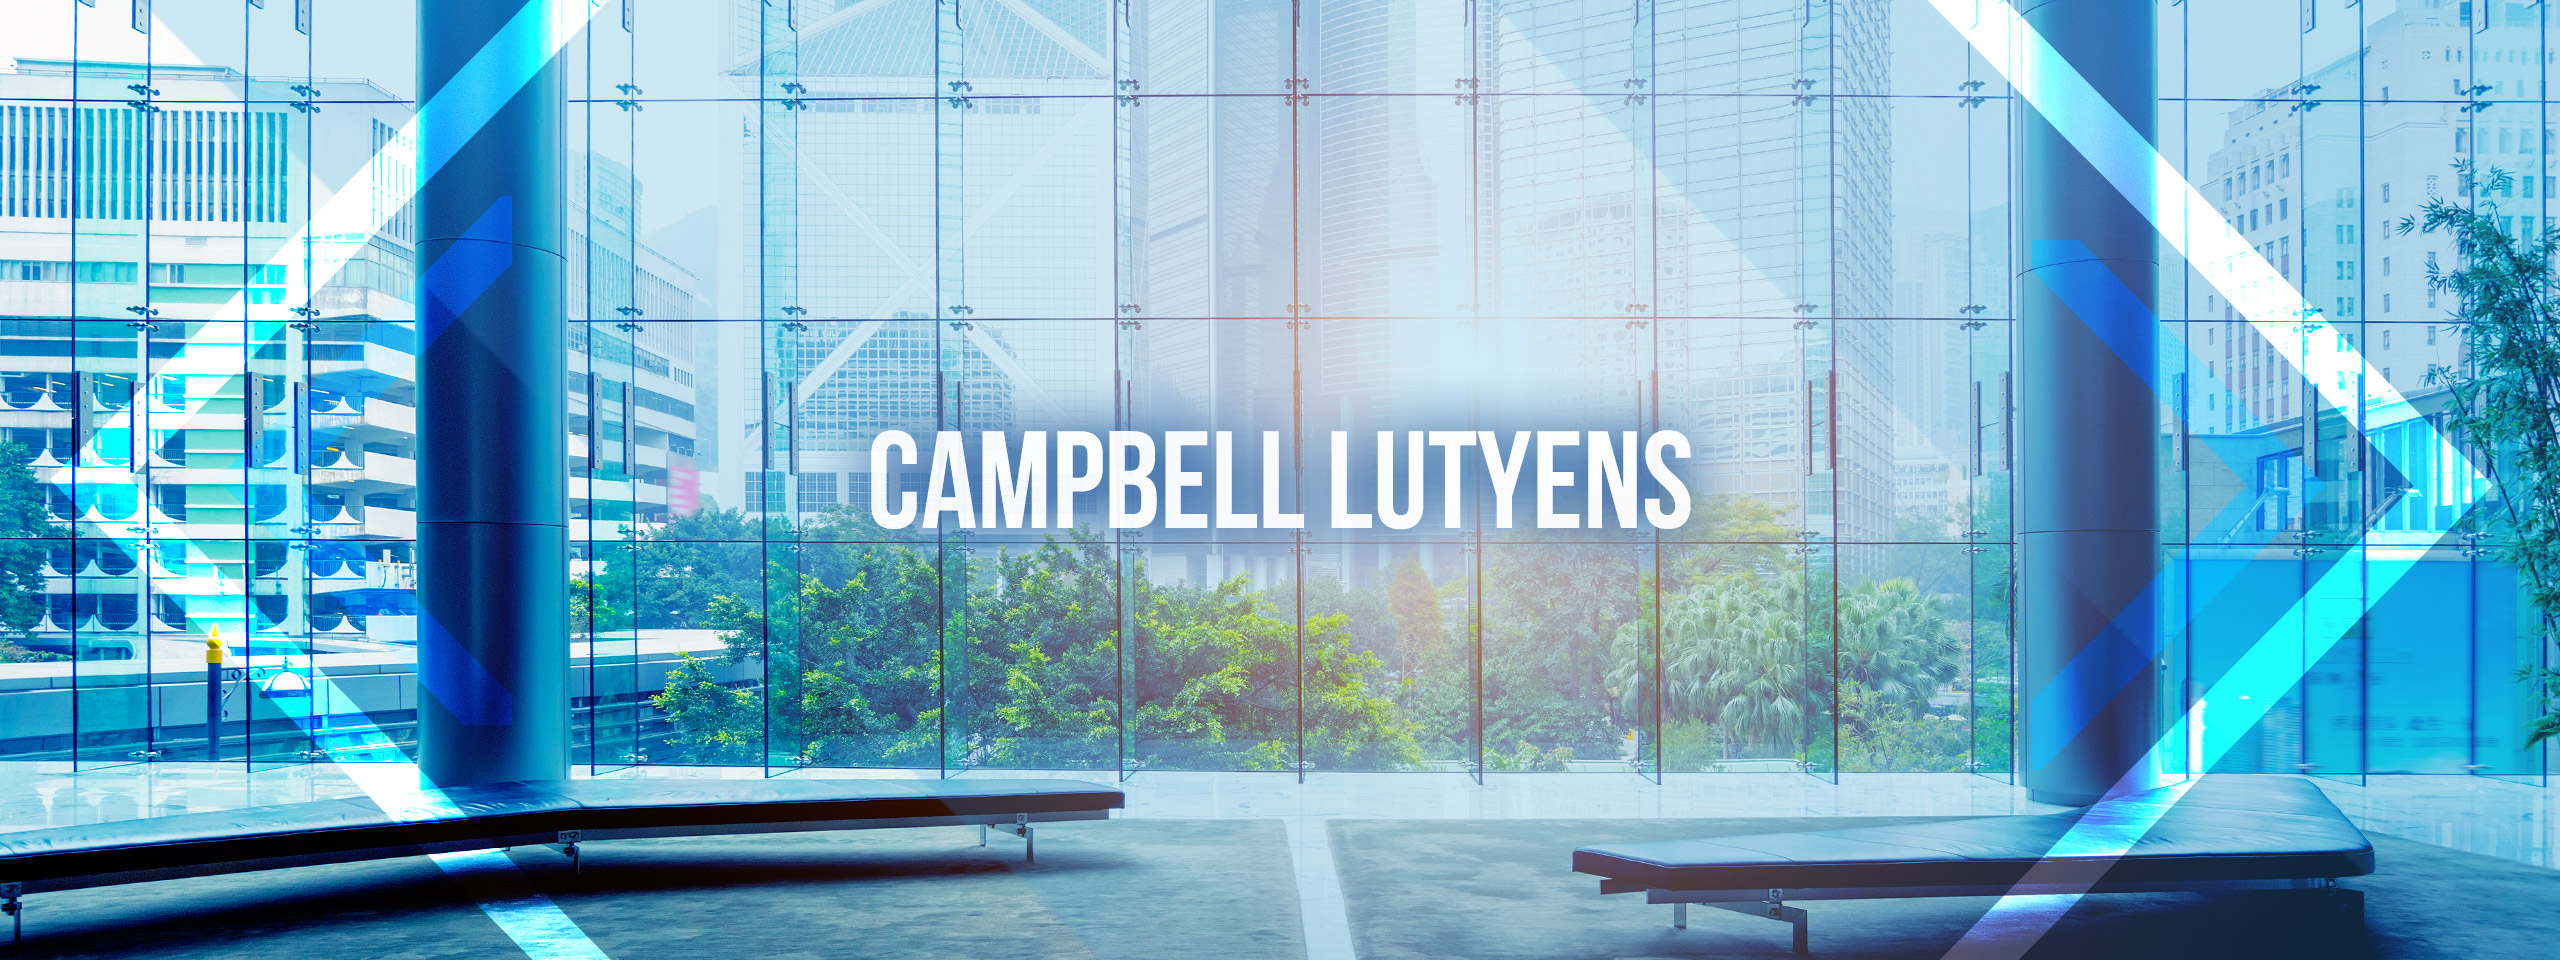 Campbell Lutyens